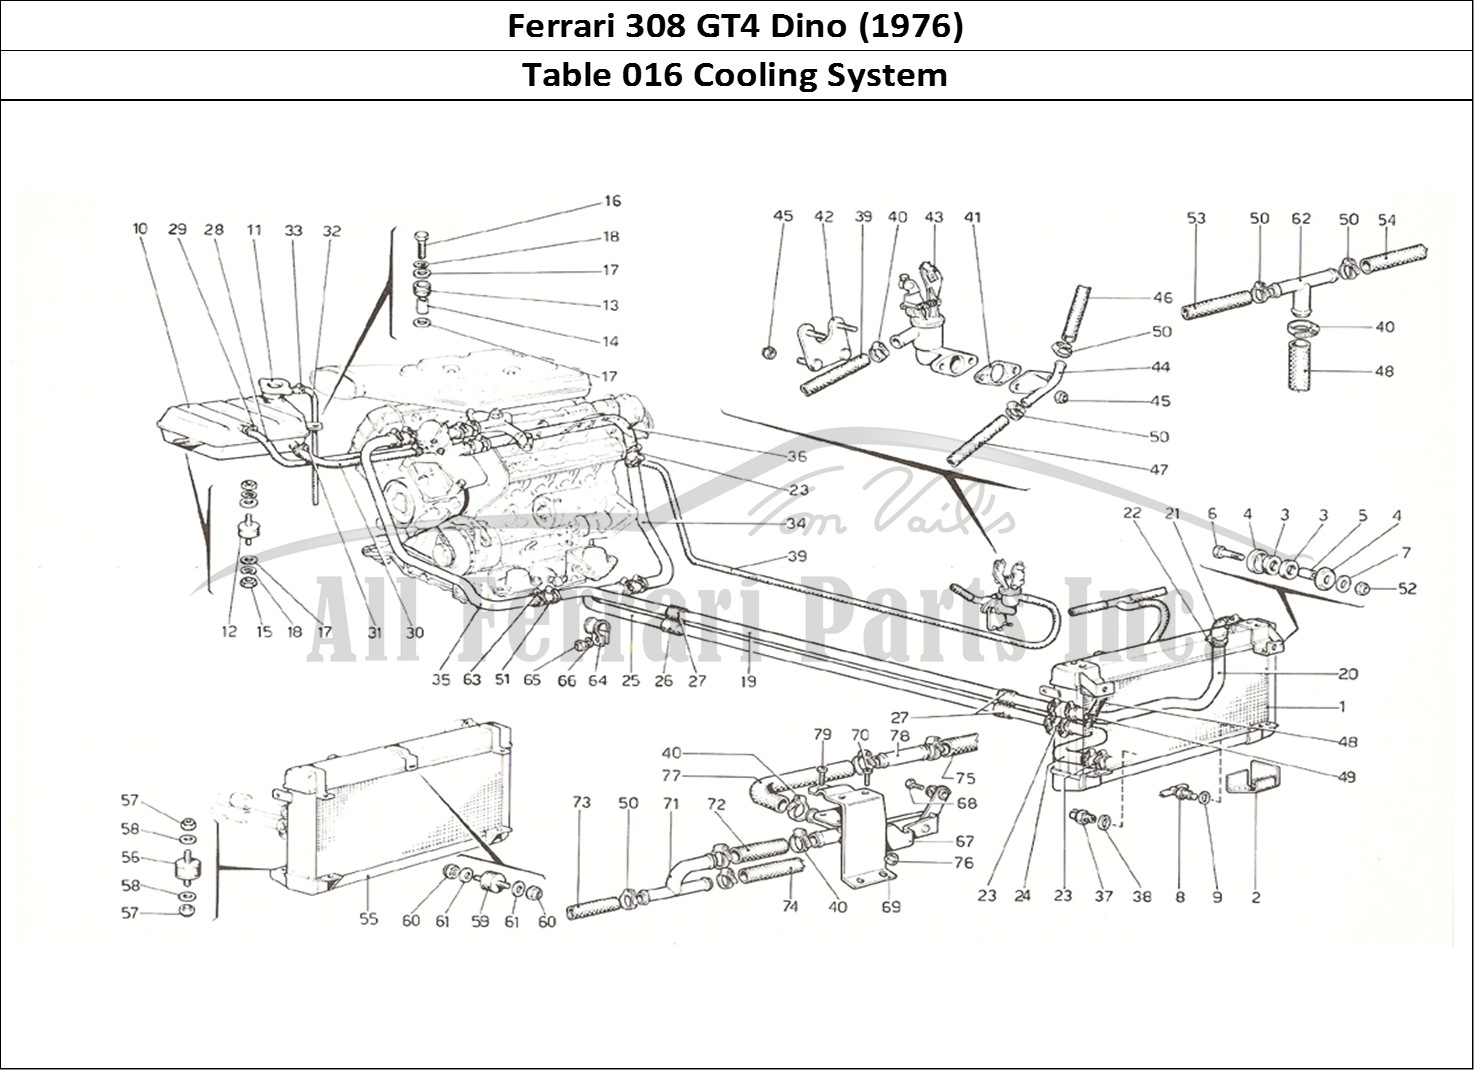 Ferrari Parts Ferrari 308 GT4 Dino (1976) Page 016 Cooling System